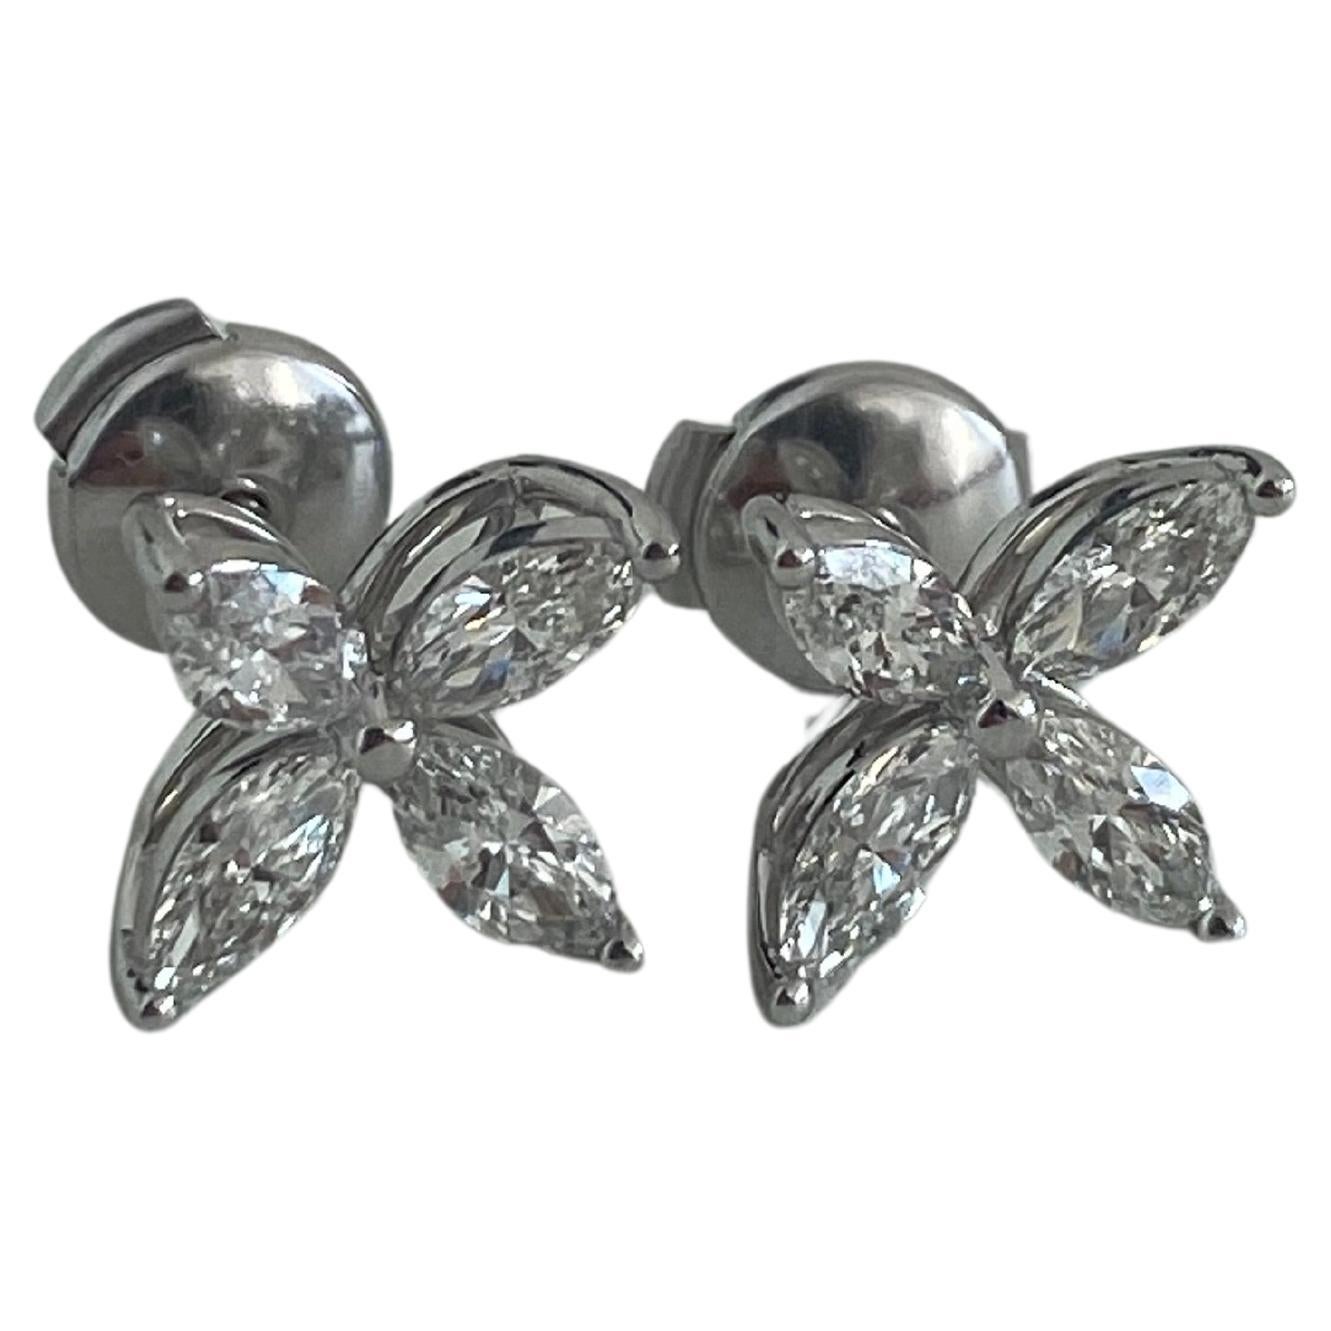 Tiffany Co Victoria platinum with diamonds mini studs earrings 